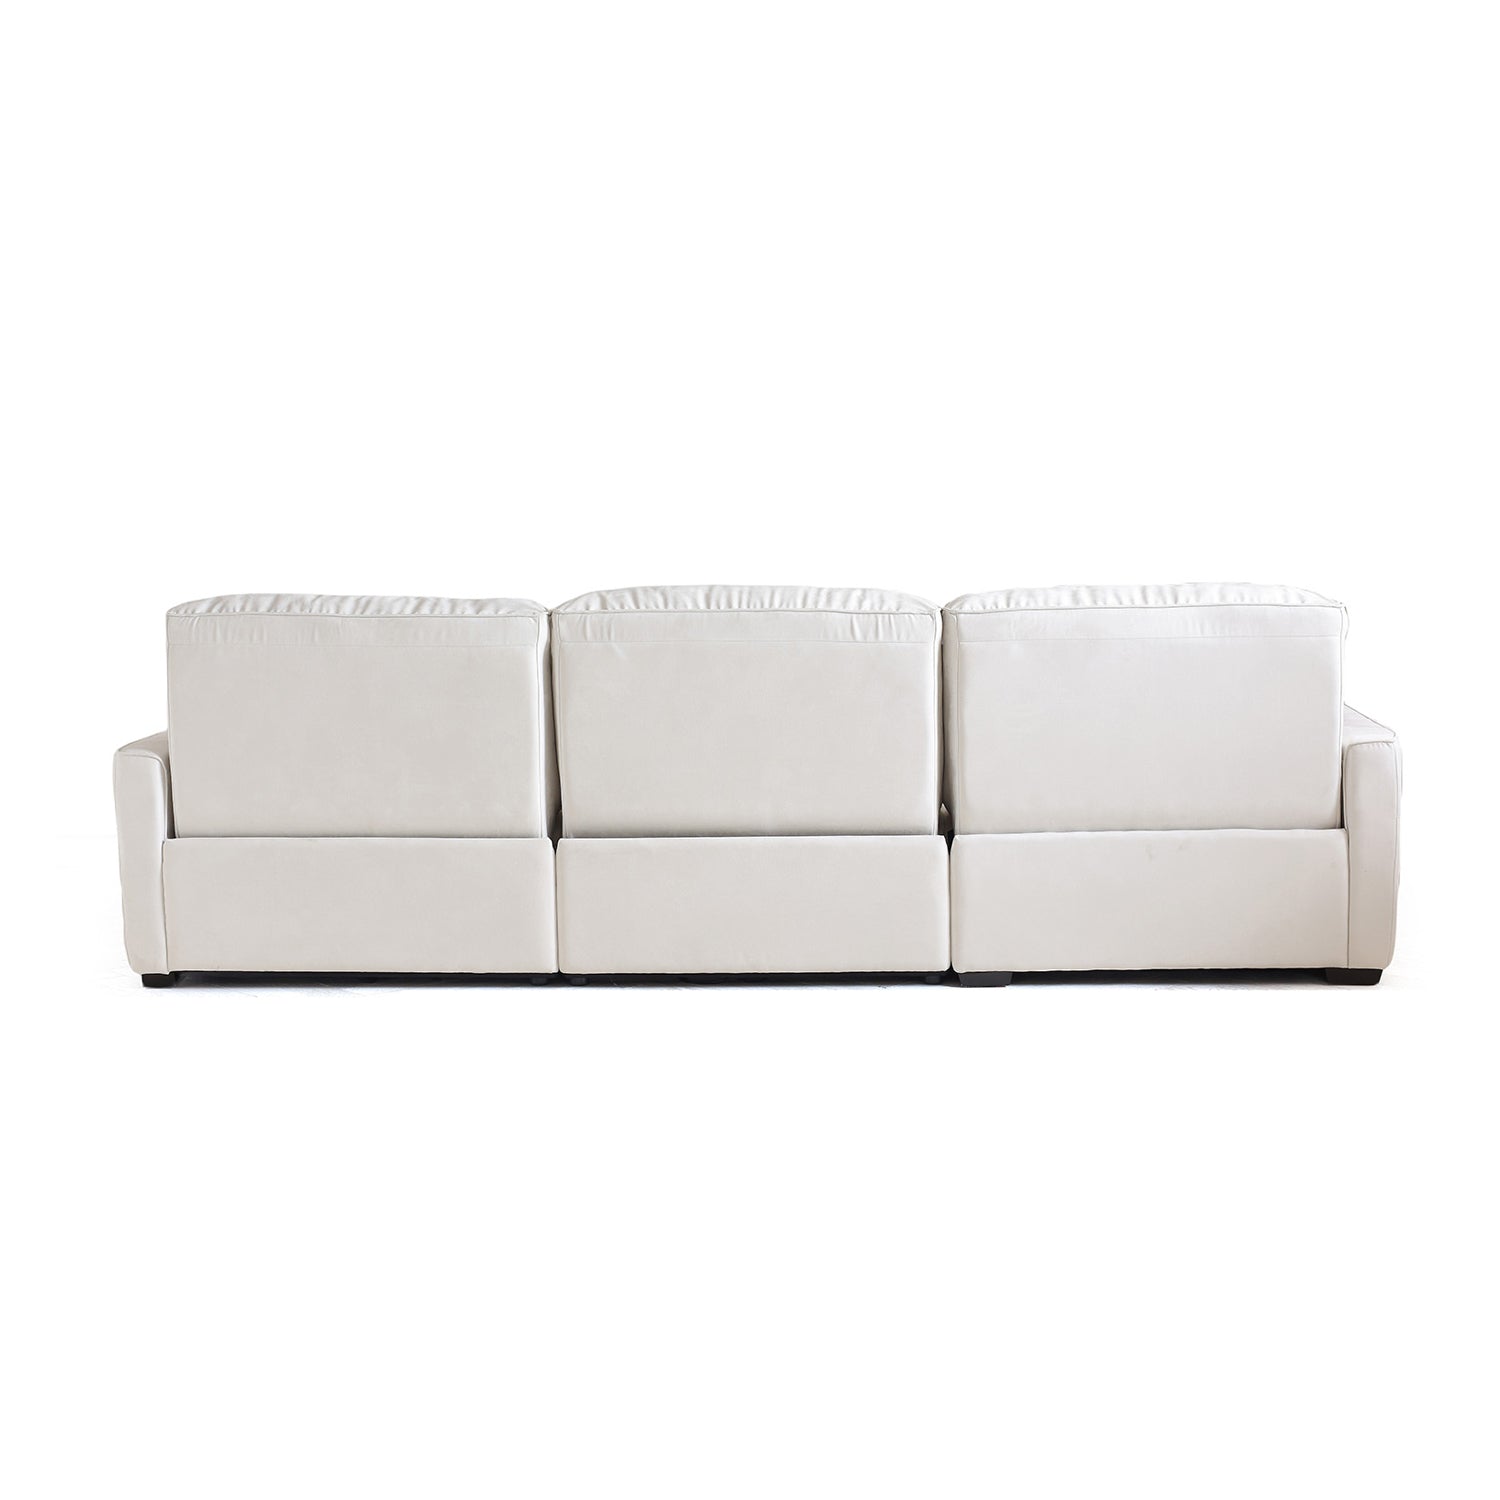 Intimo Recliner Sofa